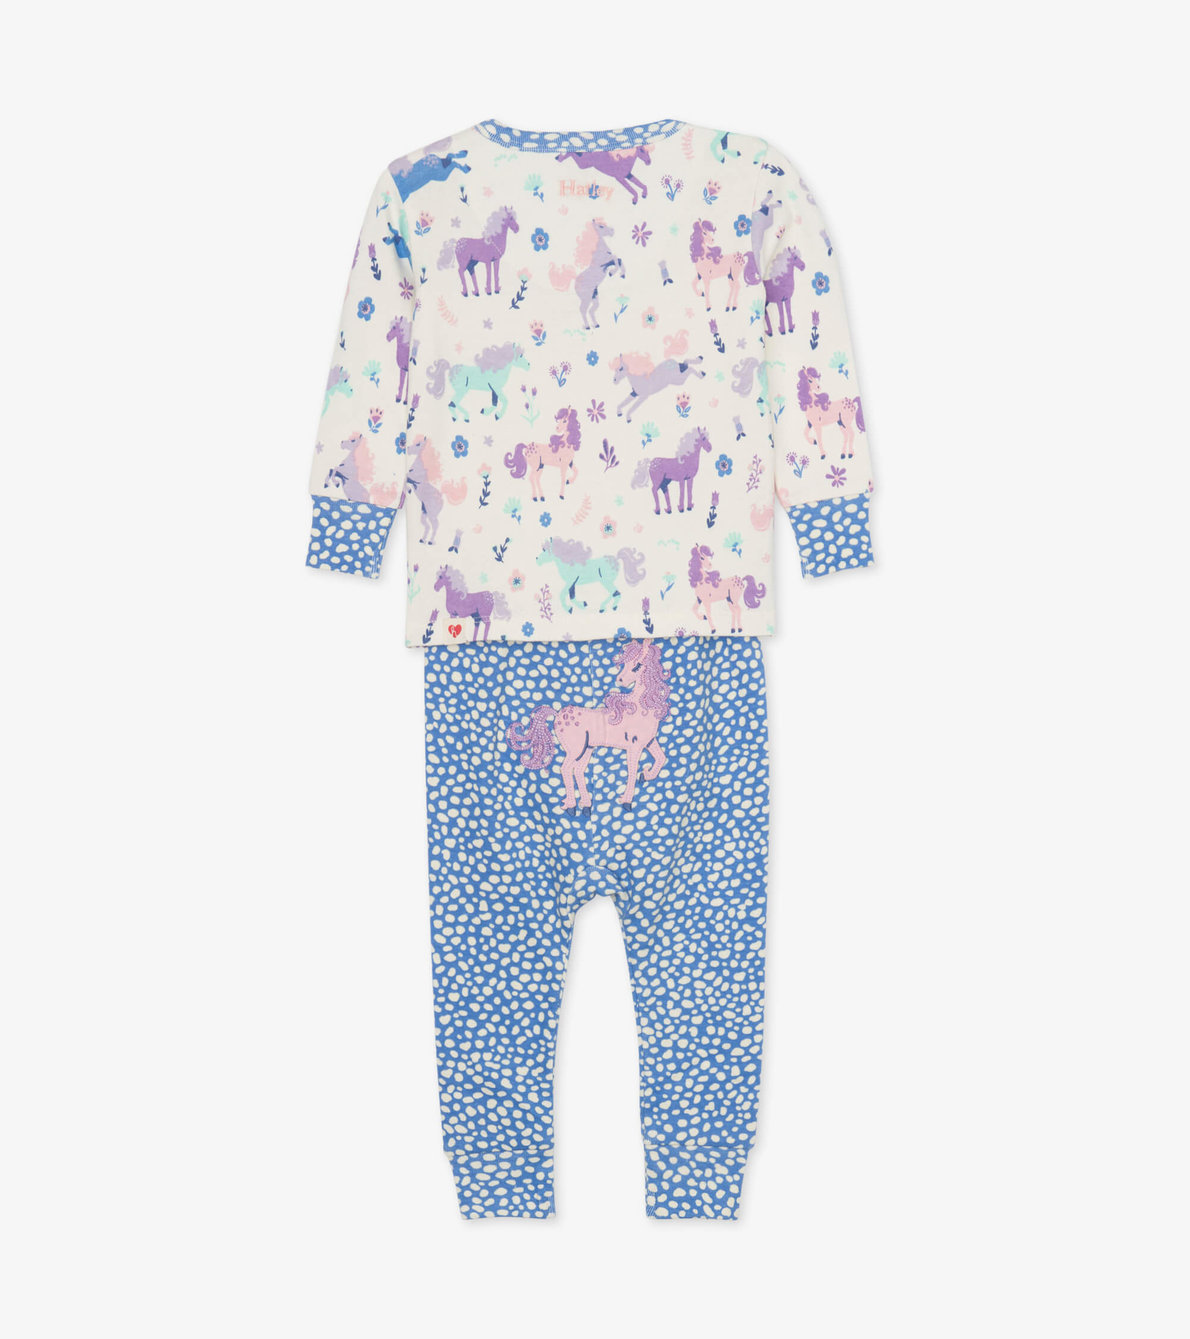 View larger image of Playful Ponies Organic Cotton Baby Pajama Set